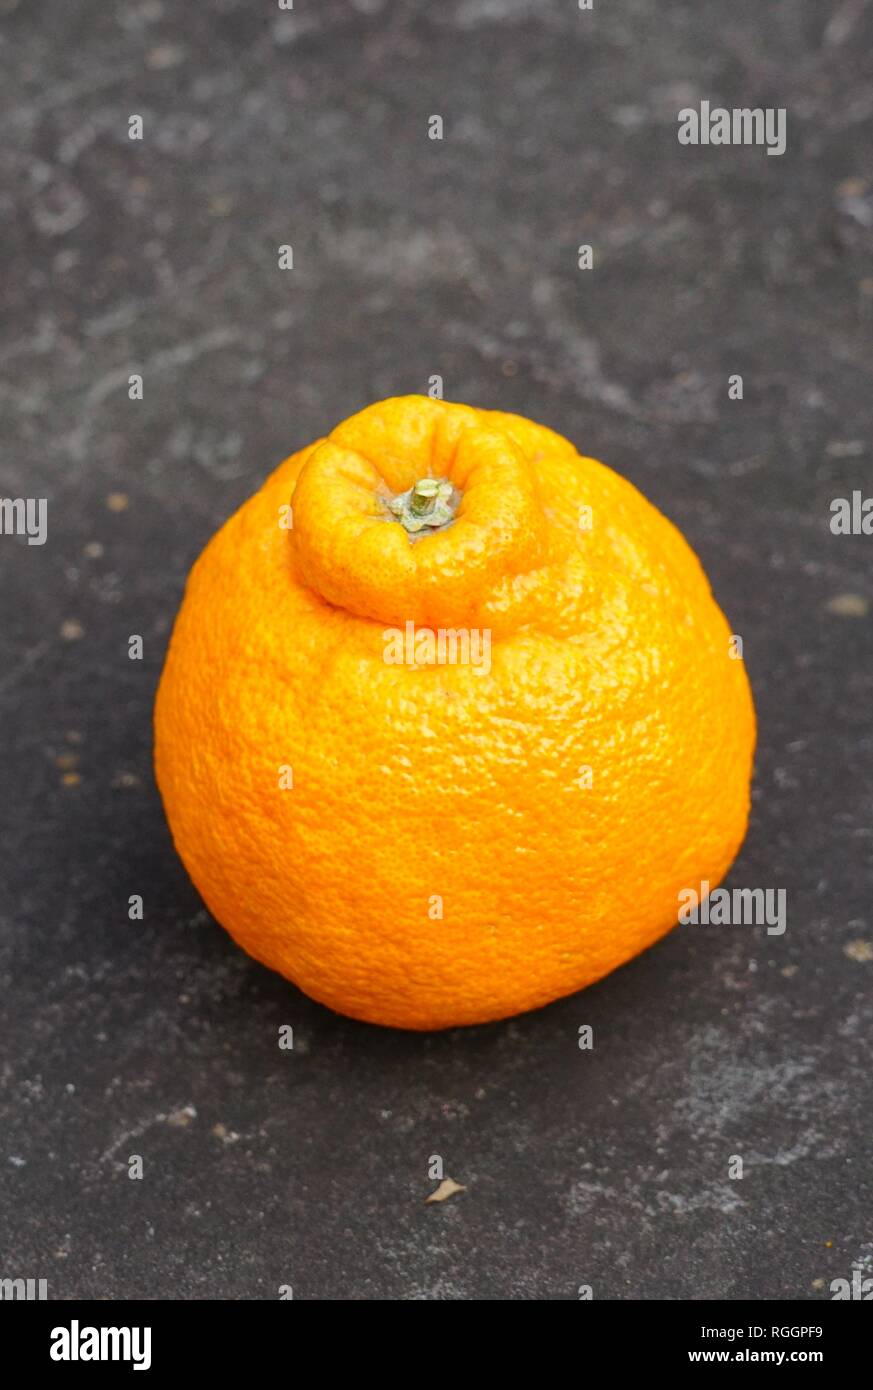 https://c8.alamy.com/comp/RGGPF9/sumo-citrus-giant-mandarin-orange-fruit-RGGPF9.jpg